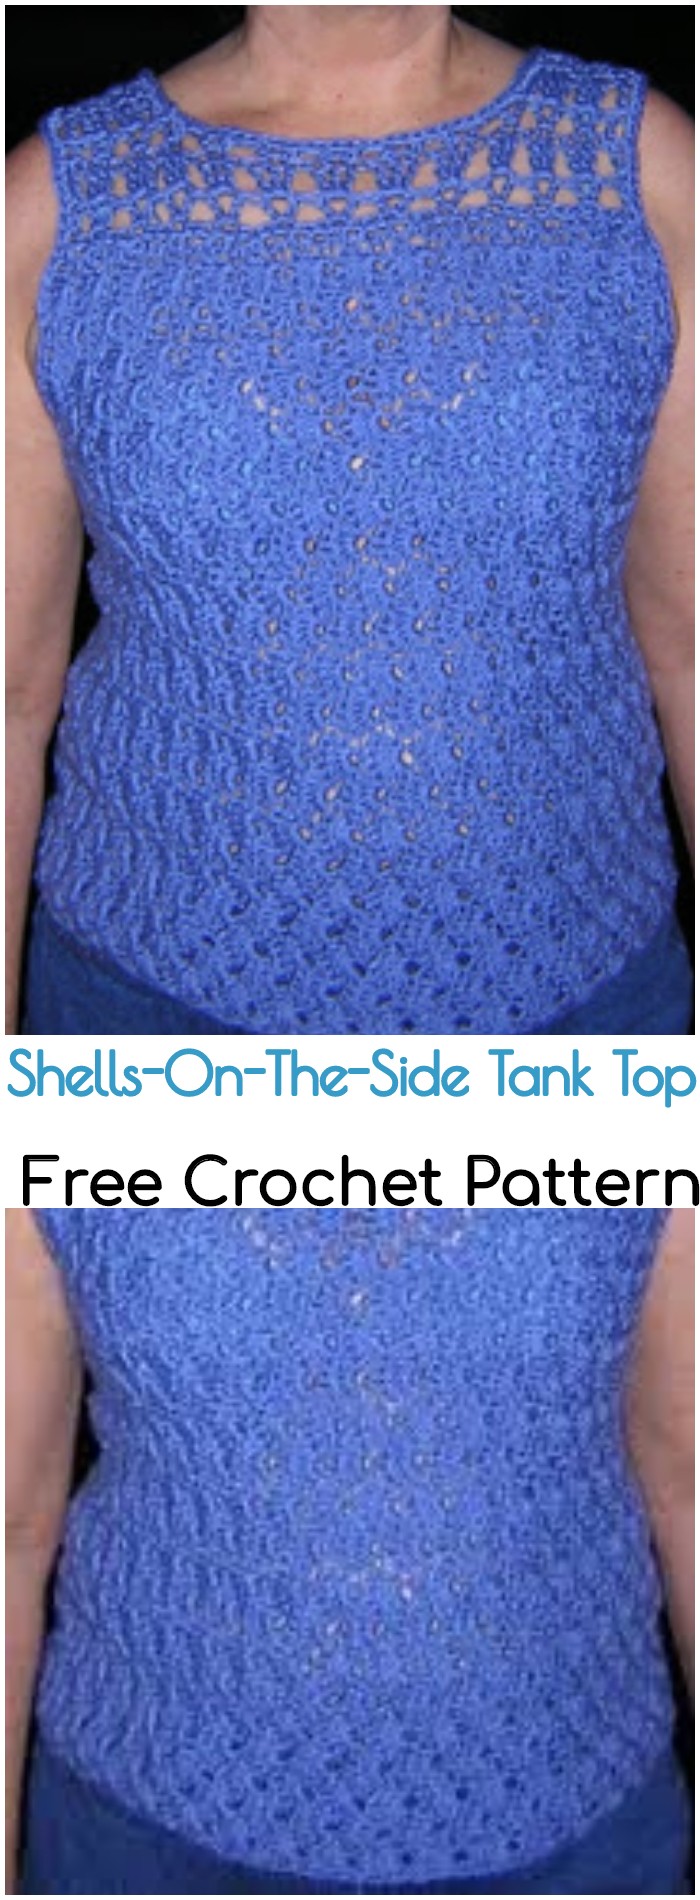 Crochet Shells-On-The-Side Tank Top